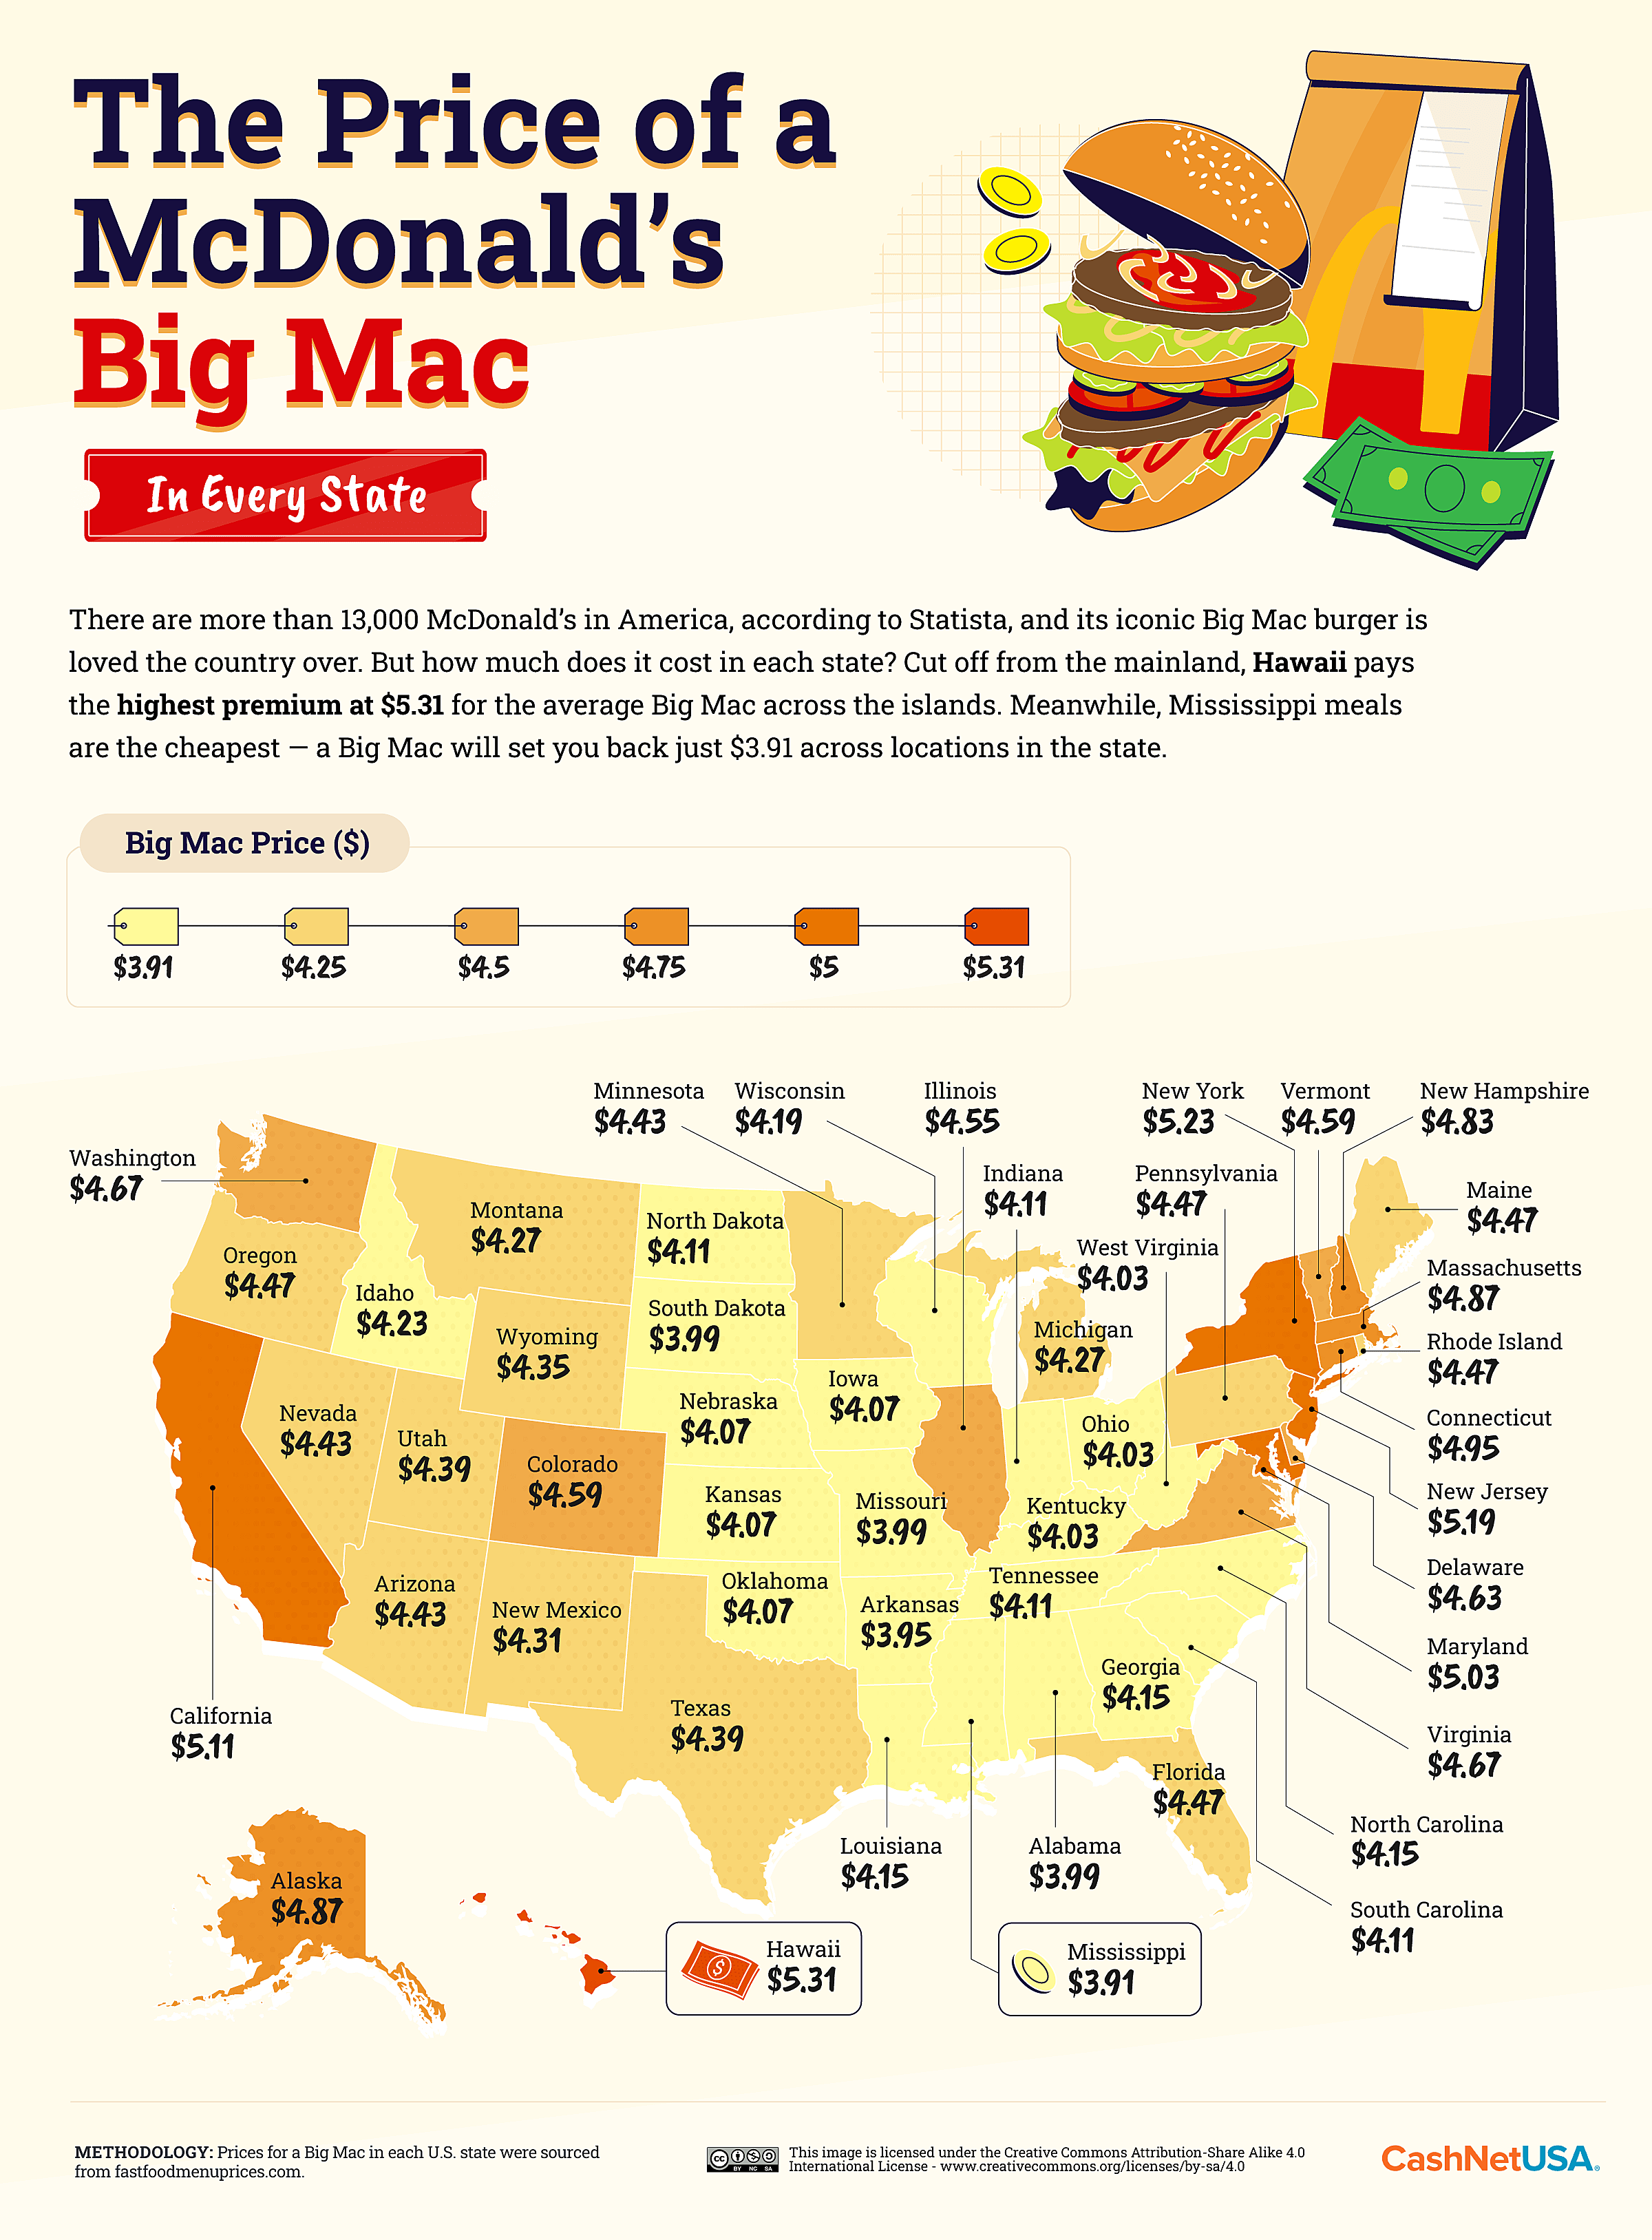 How Do South Dakota, Iowa, and Minnesota Big Mac Prices Compare?